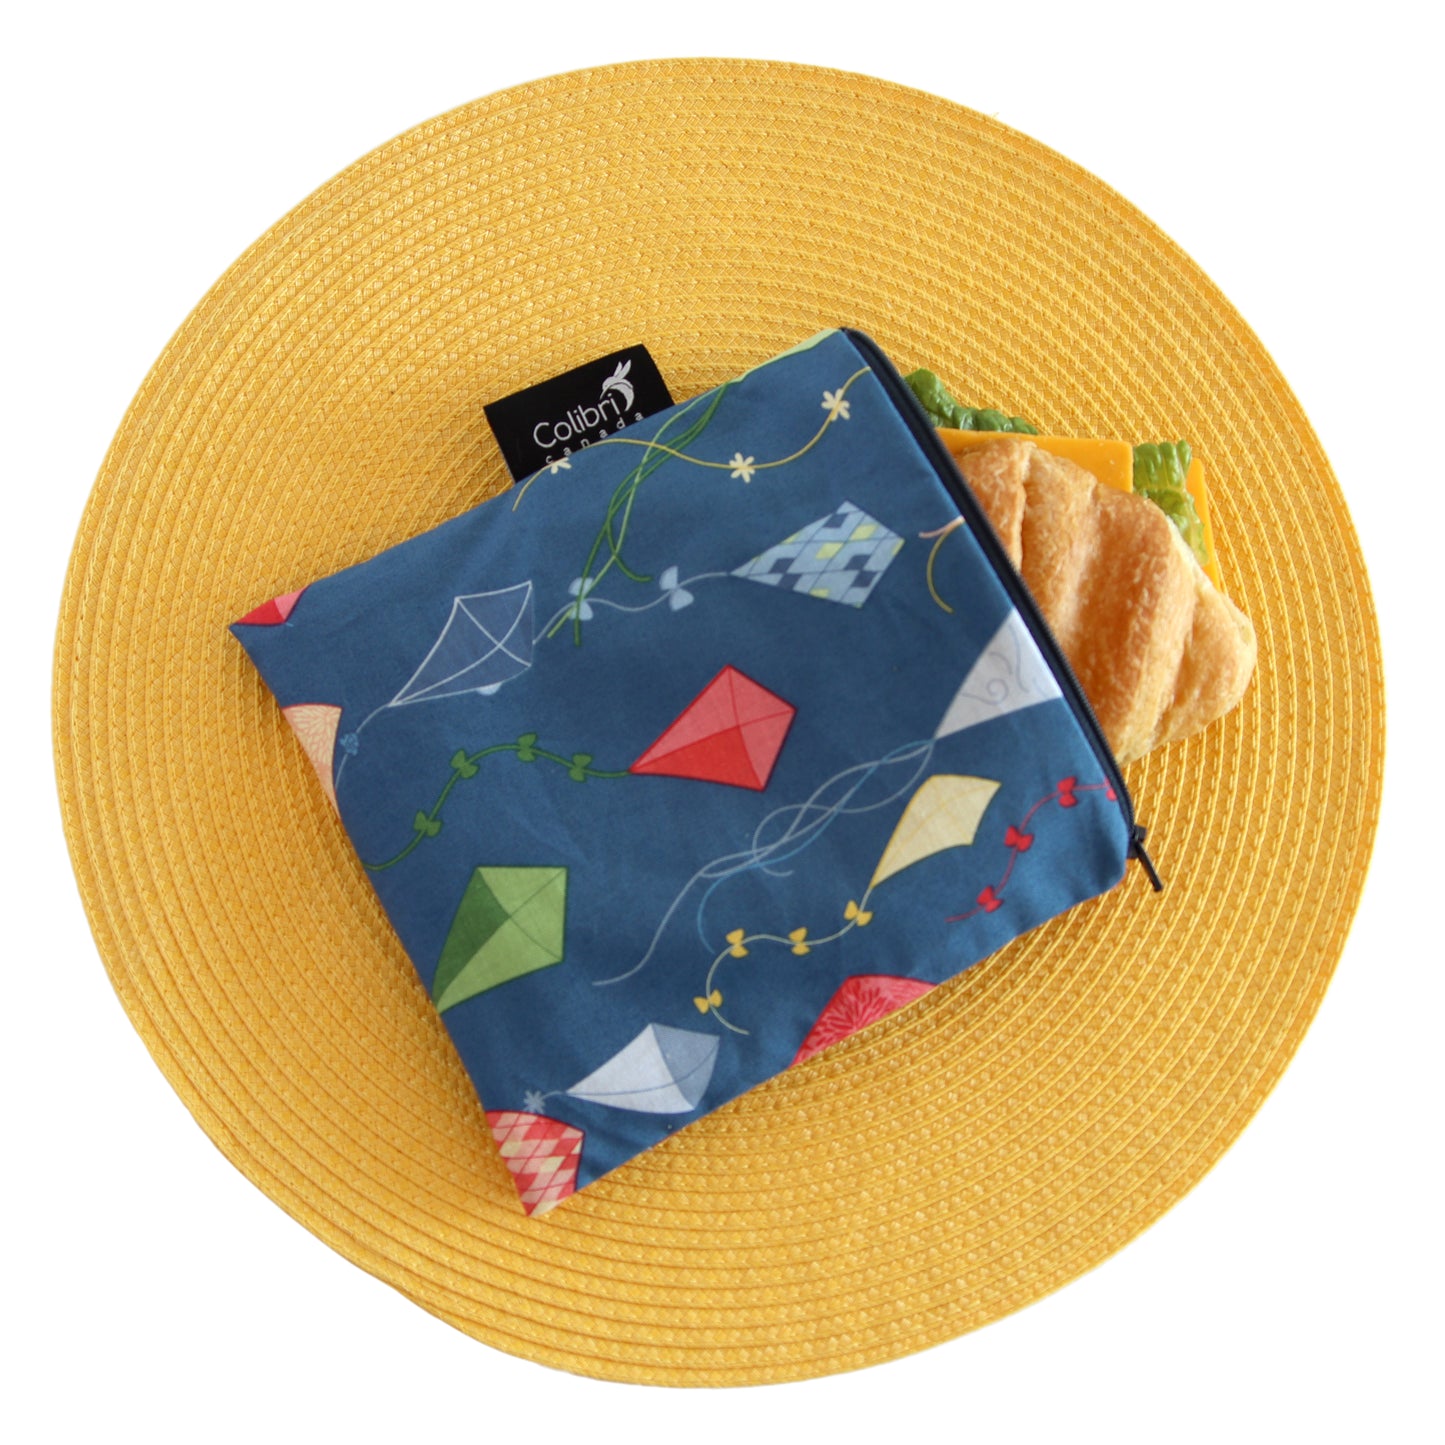 2130 - Kites Reusable Snack Bag - Large